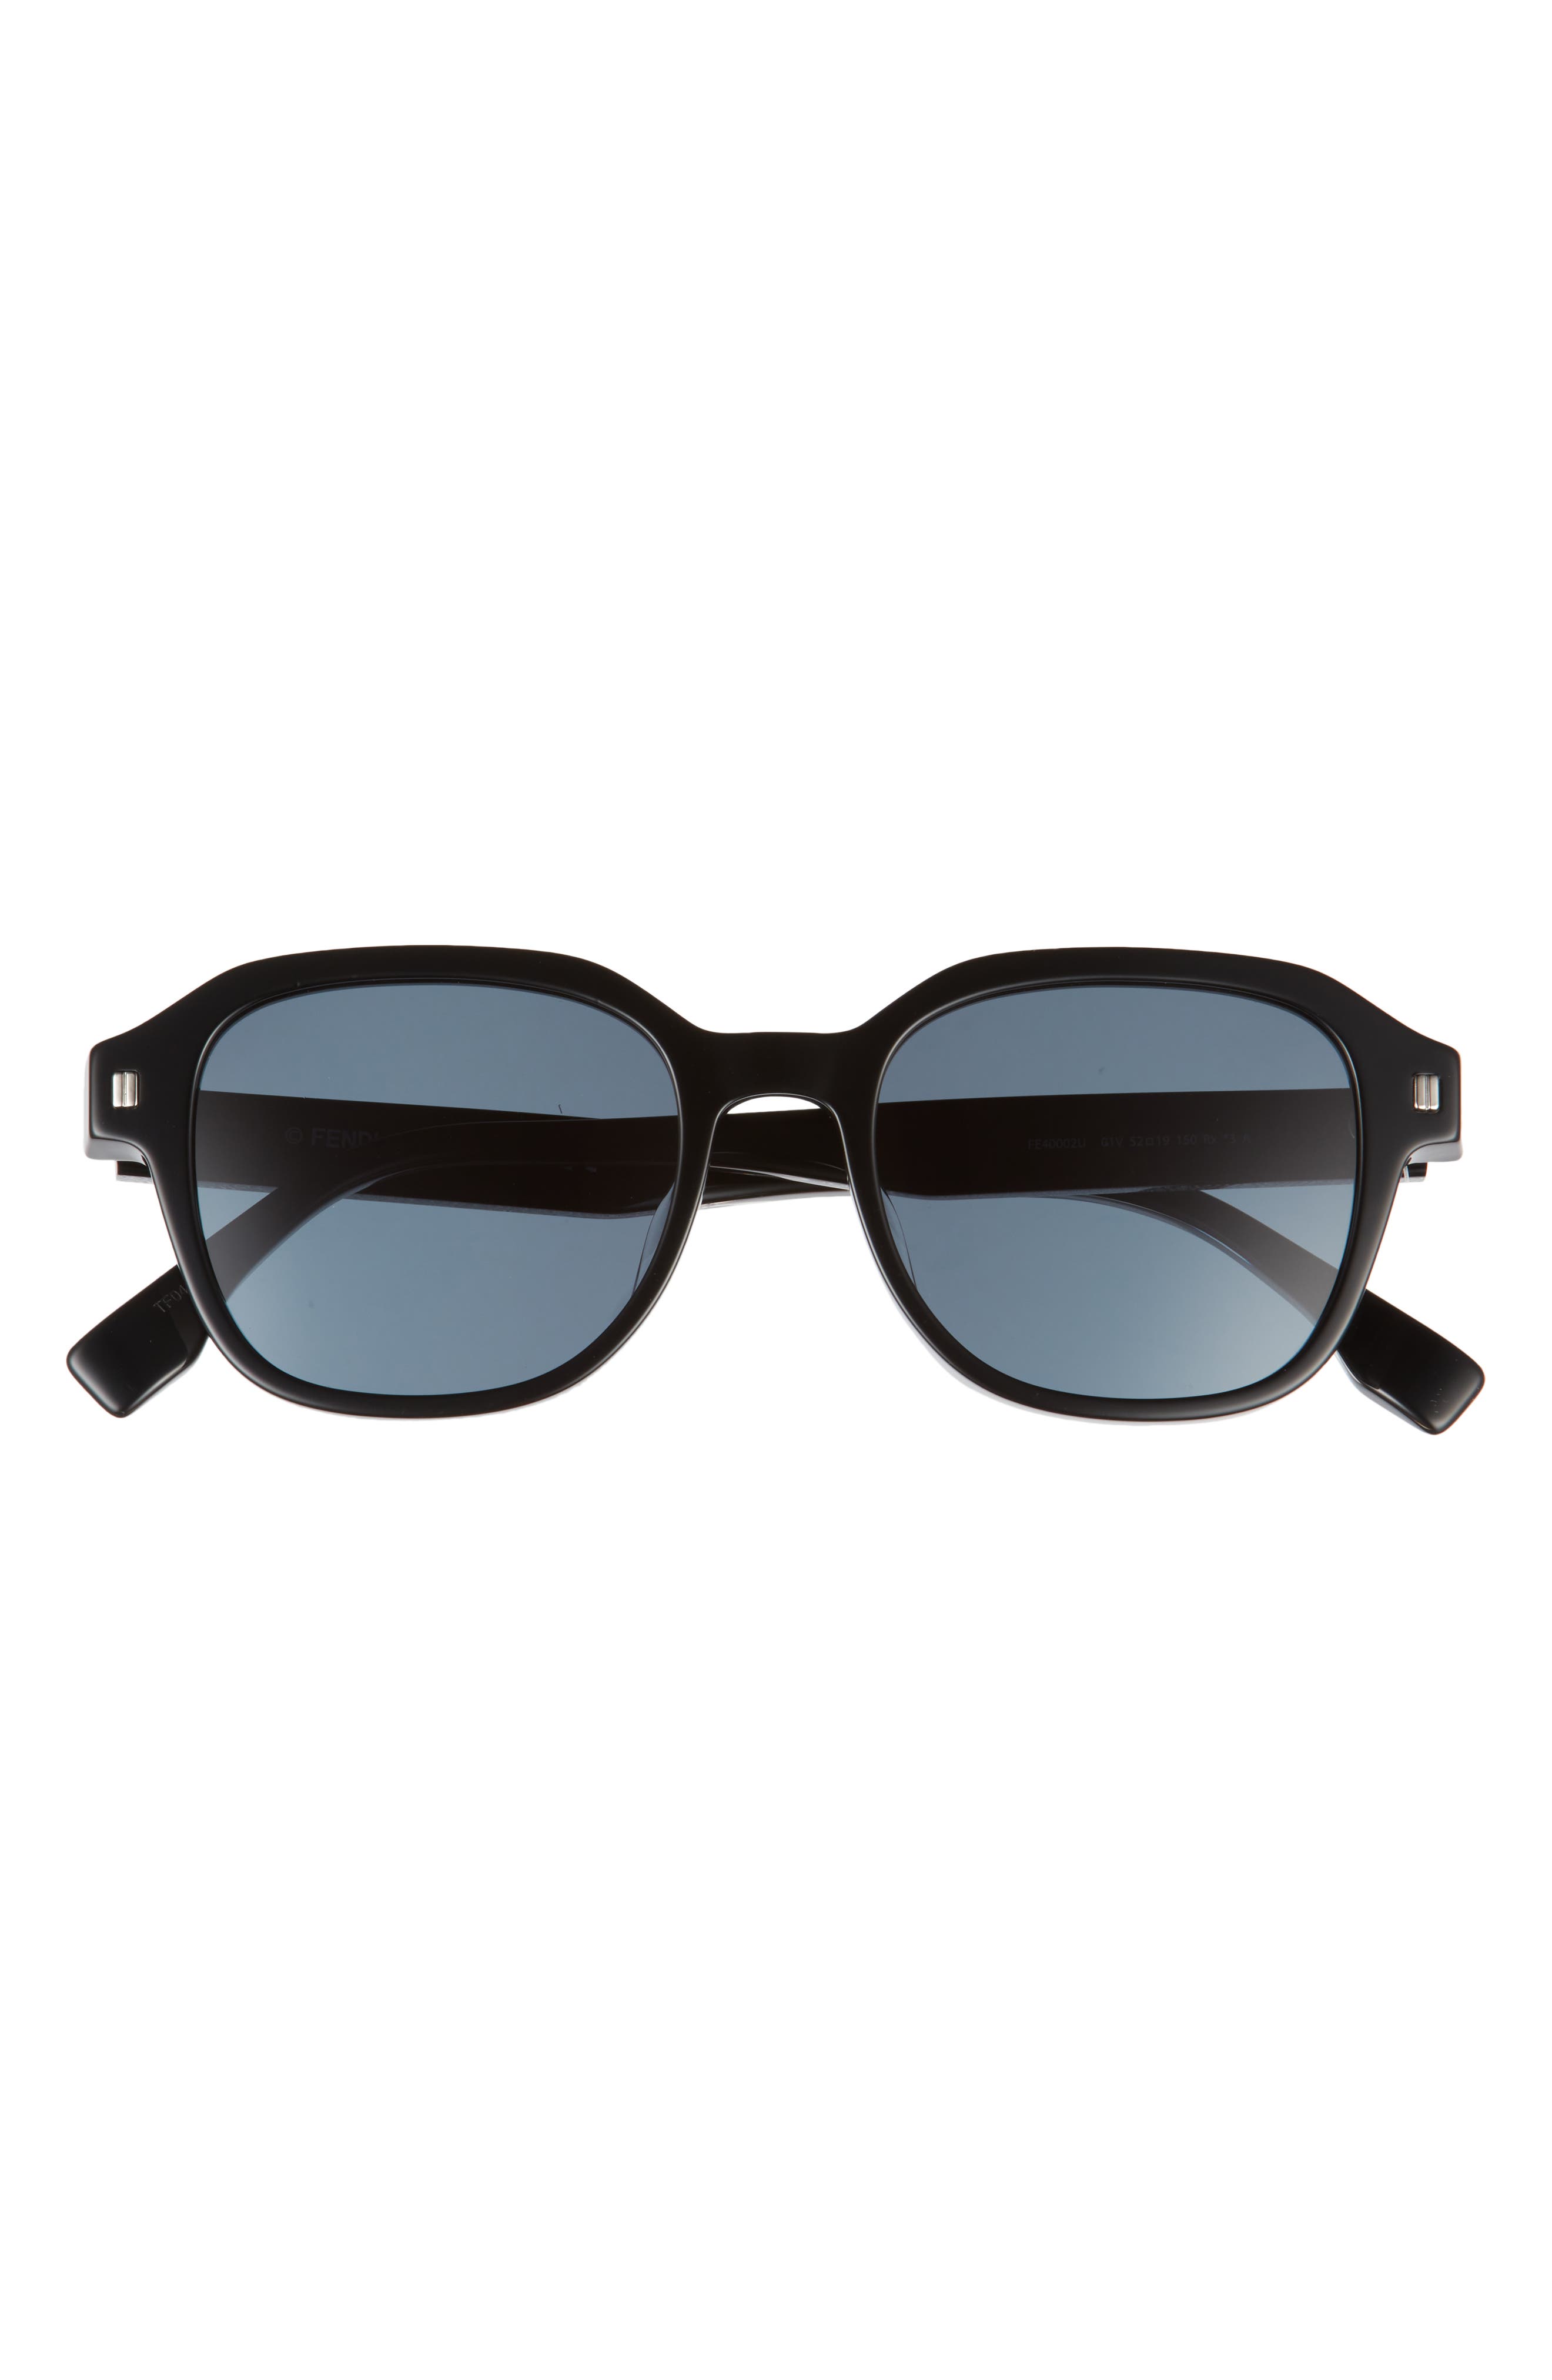 Fendi 52mm Round Sunglasses in Shiny Black /Blue at Nordstrom